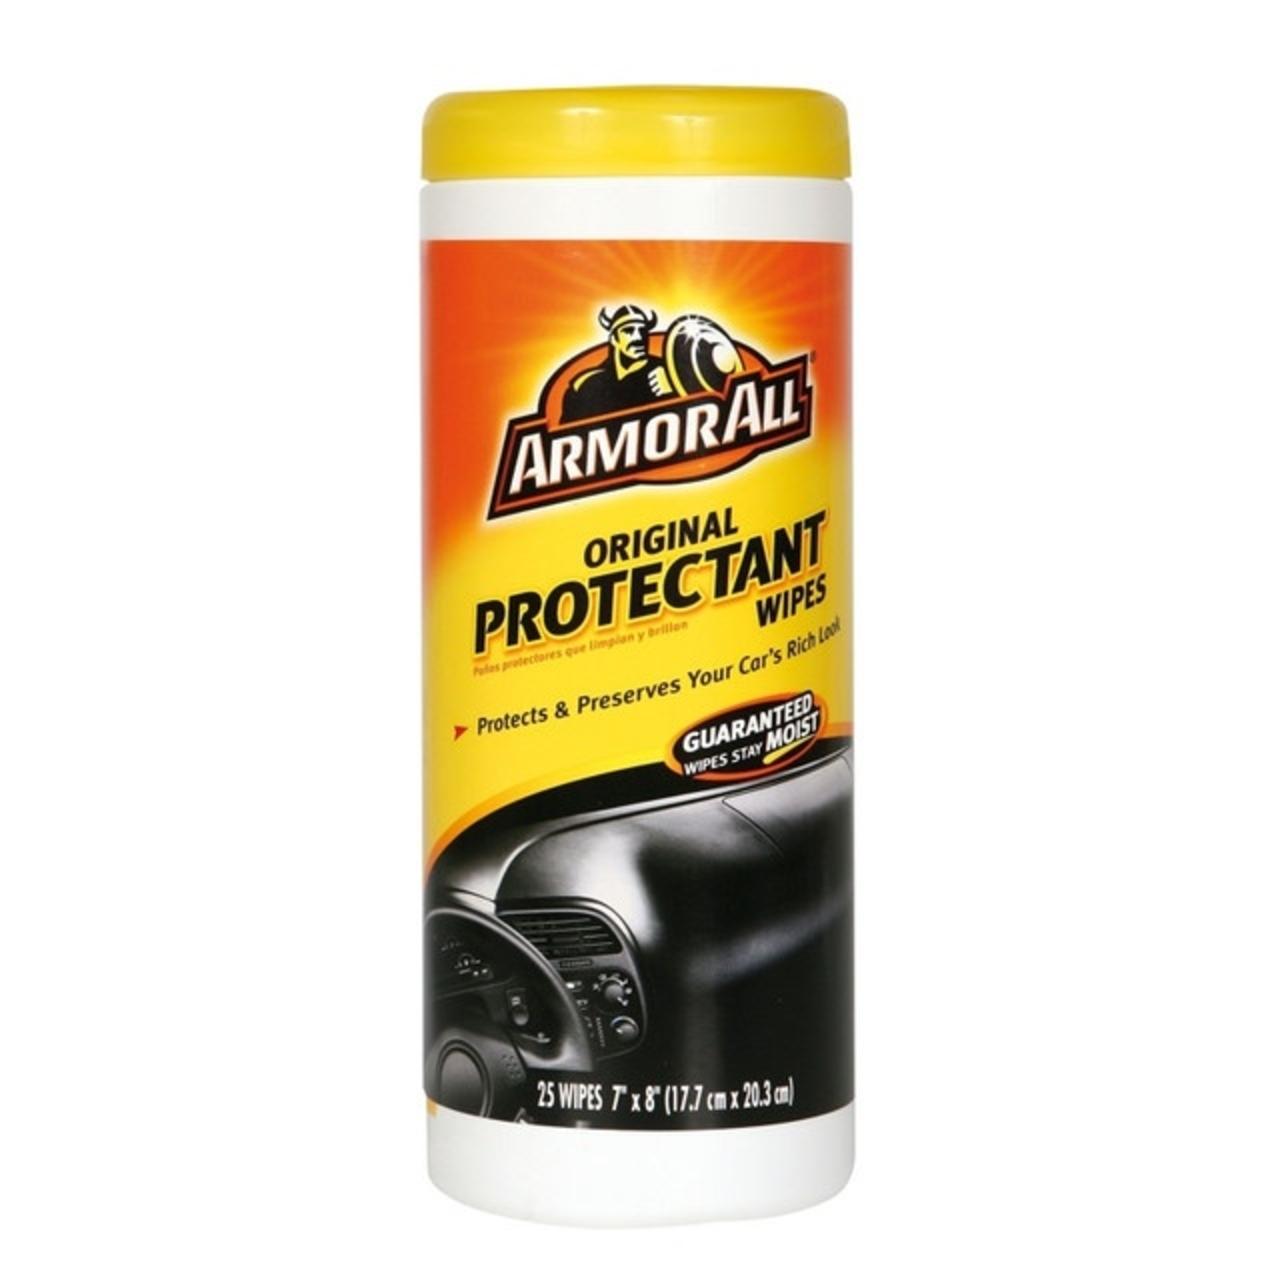 Armor All Original Protectant Wipes